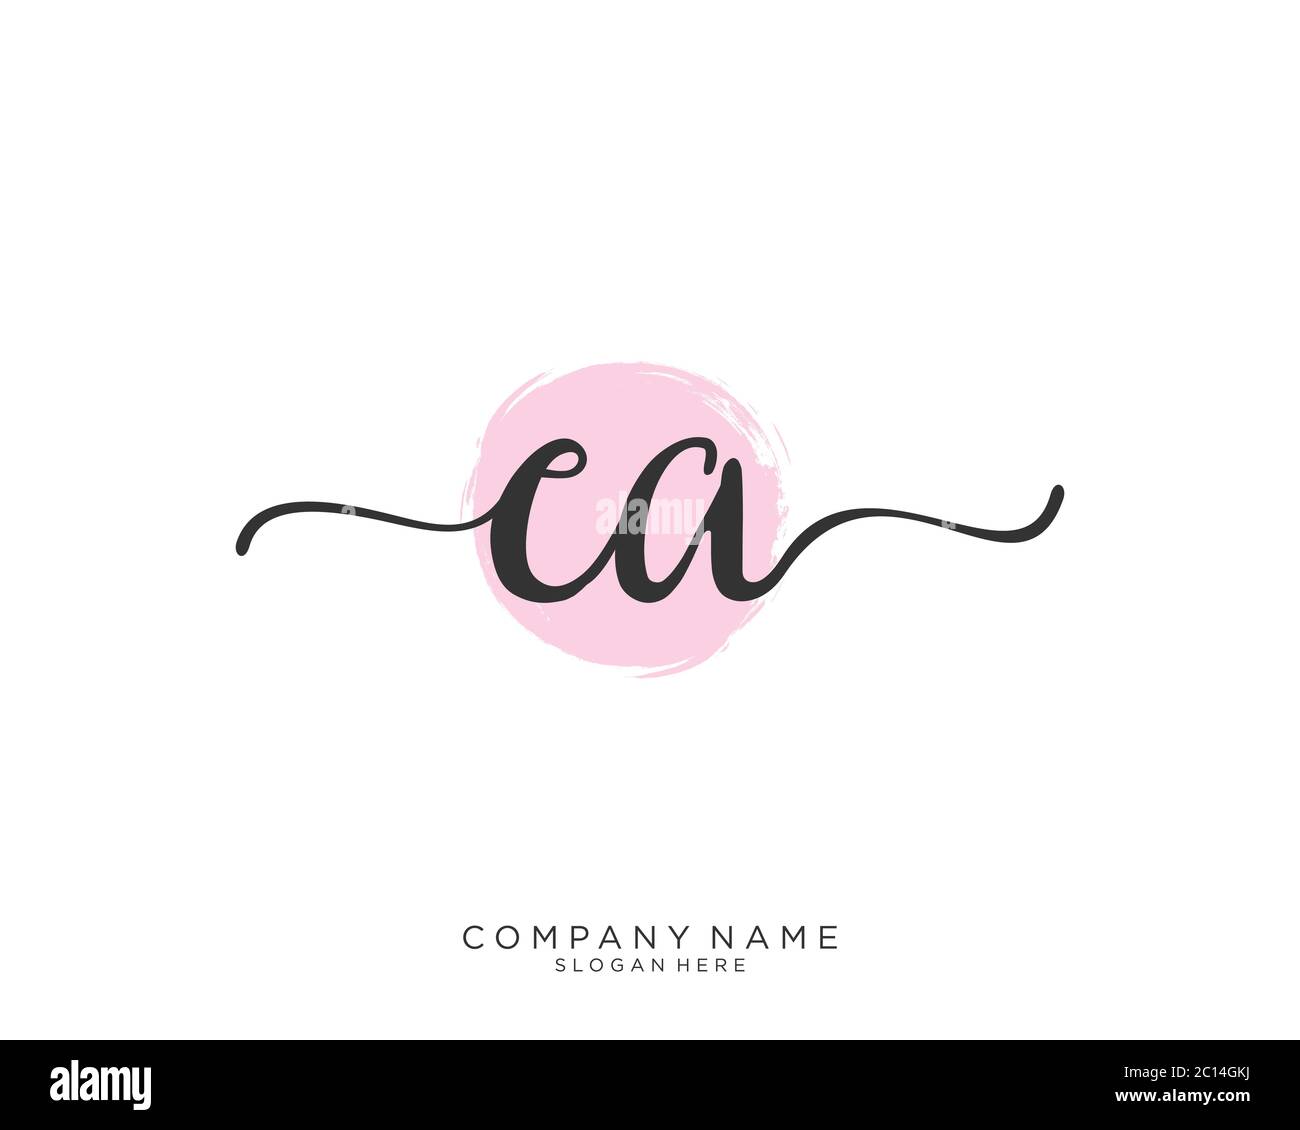 CA Initial handwriting logo vector Stock Vector